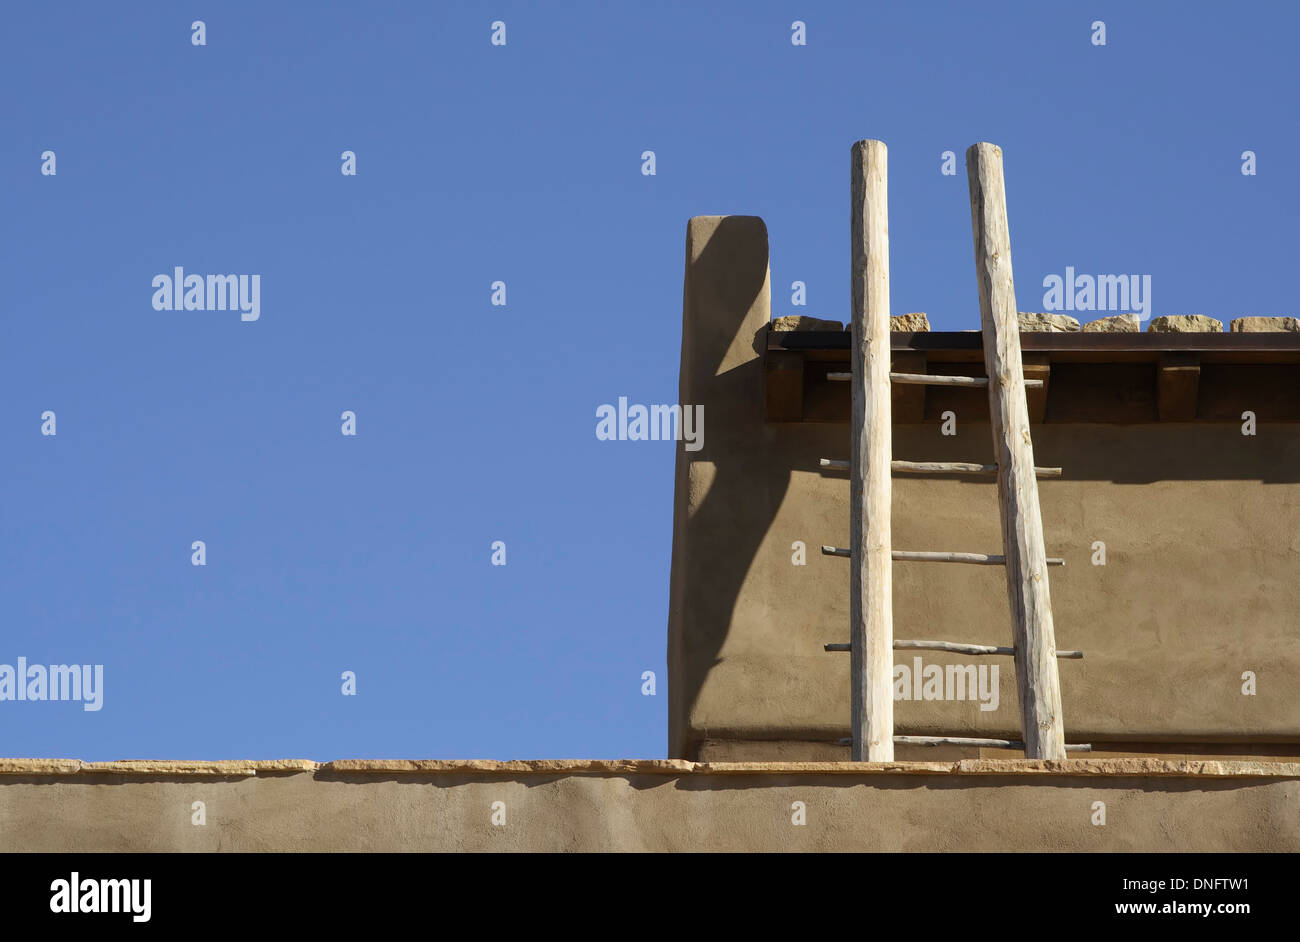 Ladder, Sky City Cultural Center, Acoma Pueblo, New Mexico USA Stock Photo